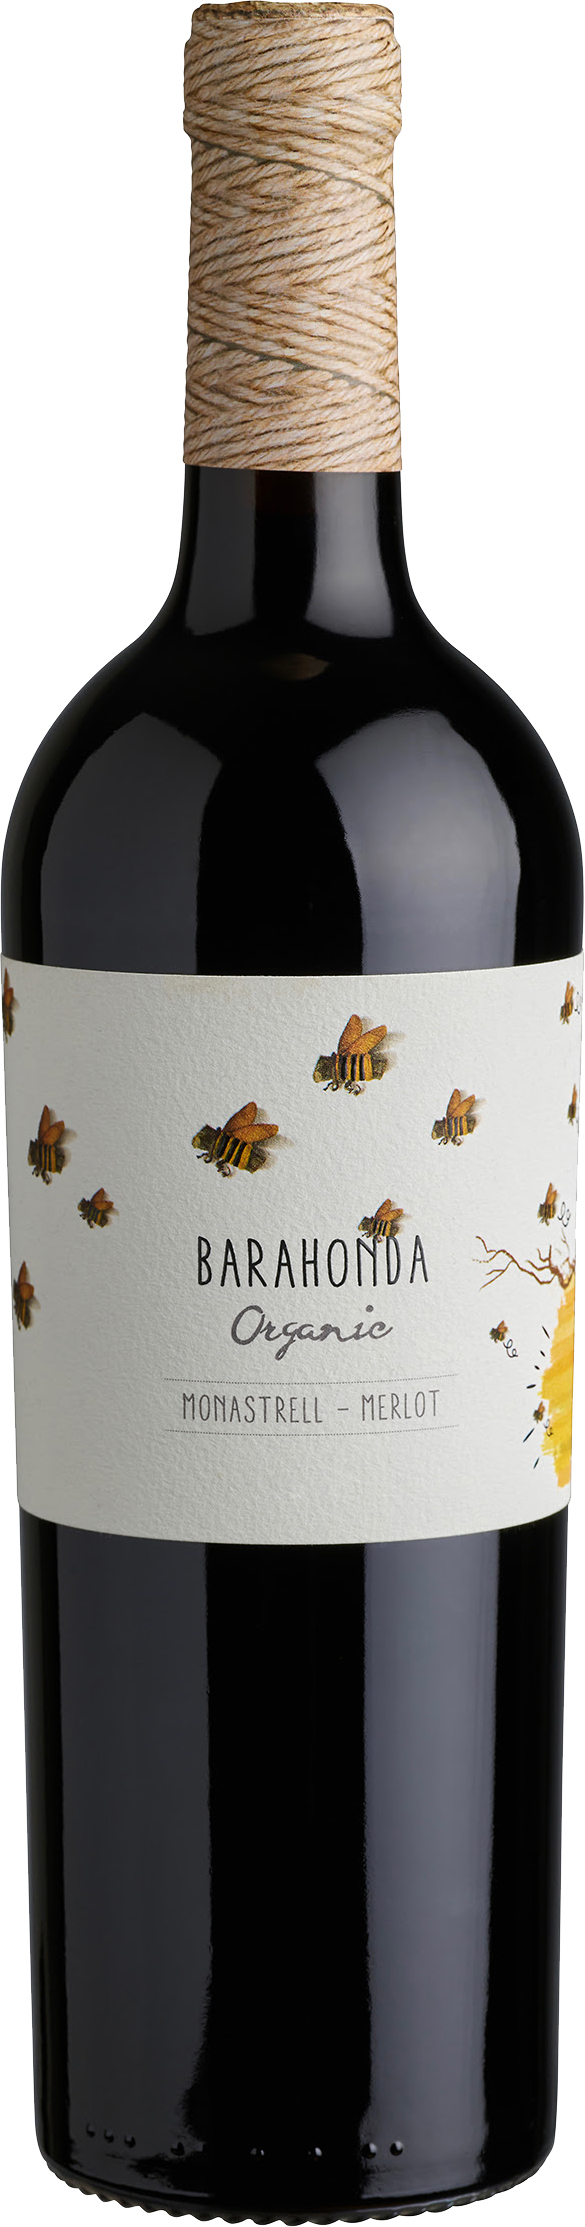 Barahonda « Organic » Monastrell Merlot